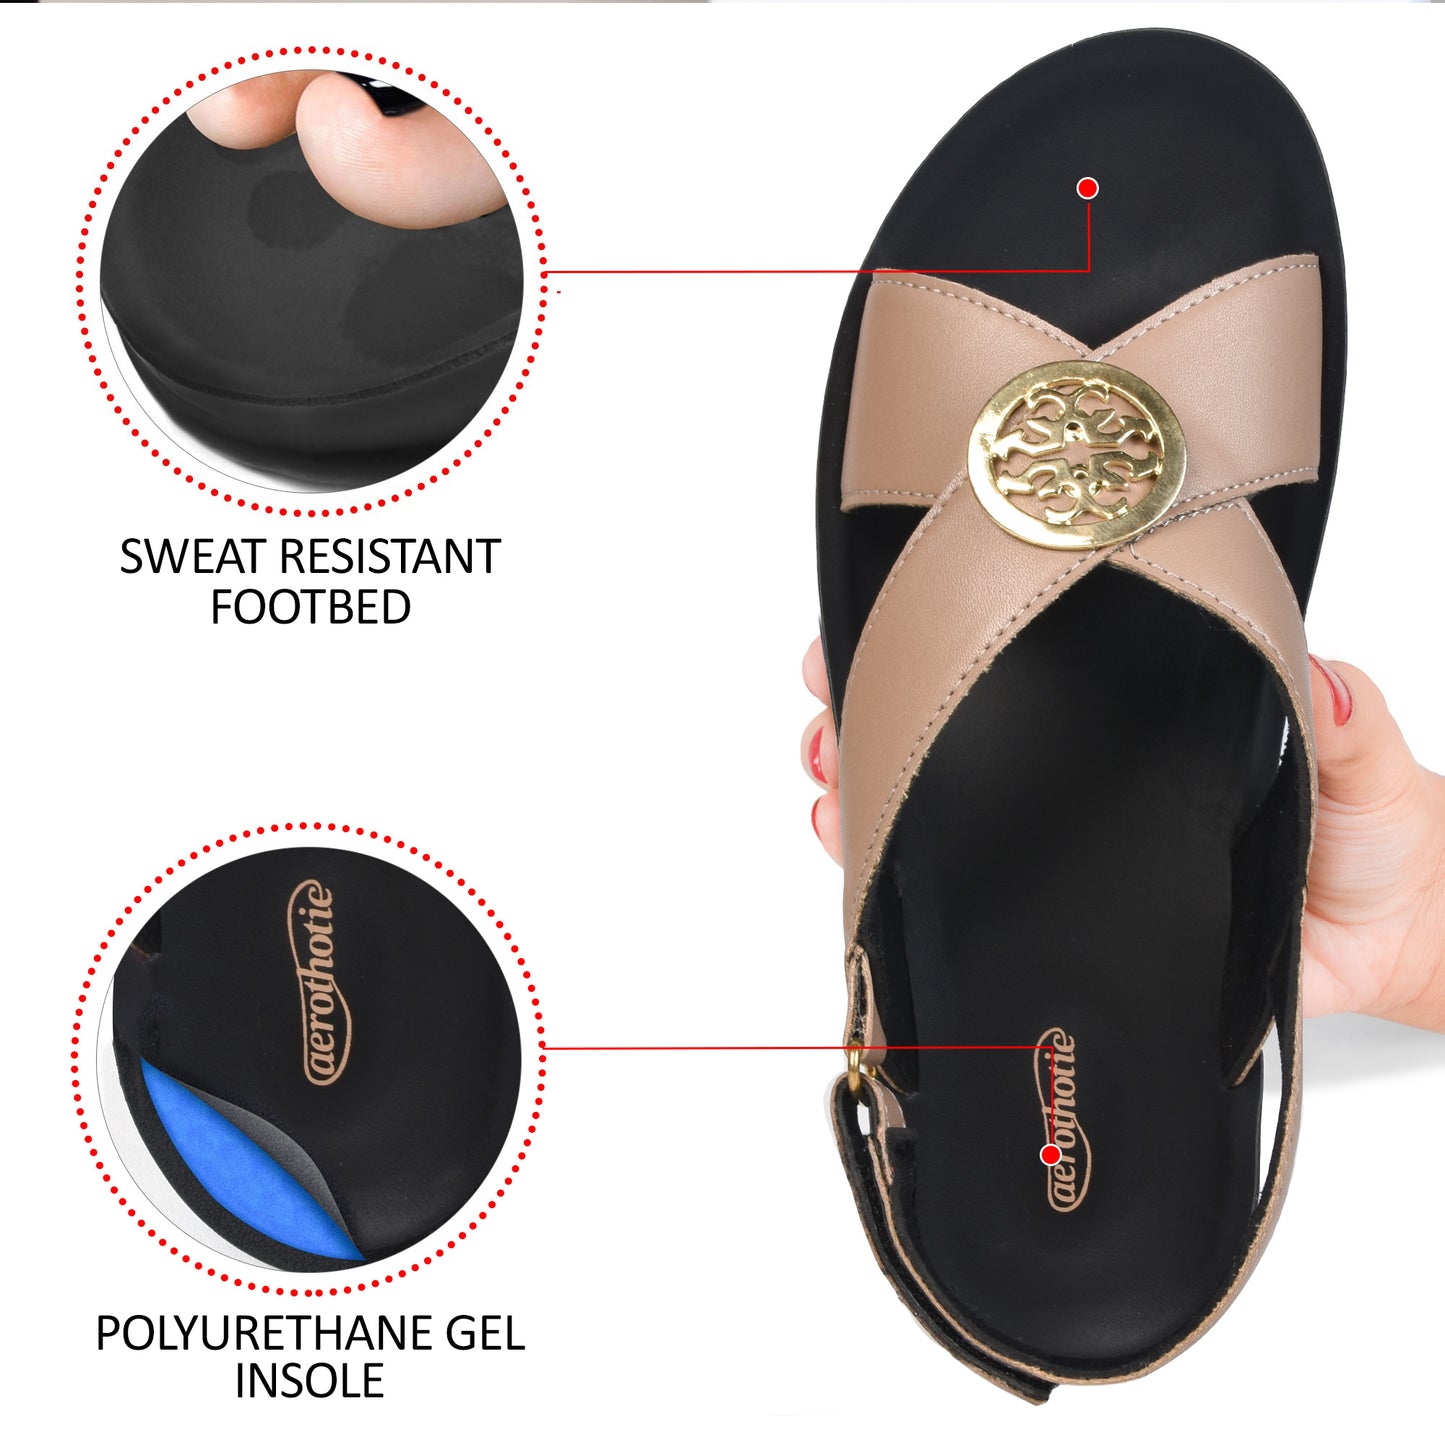 AEROTHOTIC Merak Back Strap Platform Sandals for Women - Original Thailand Imported - L1401